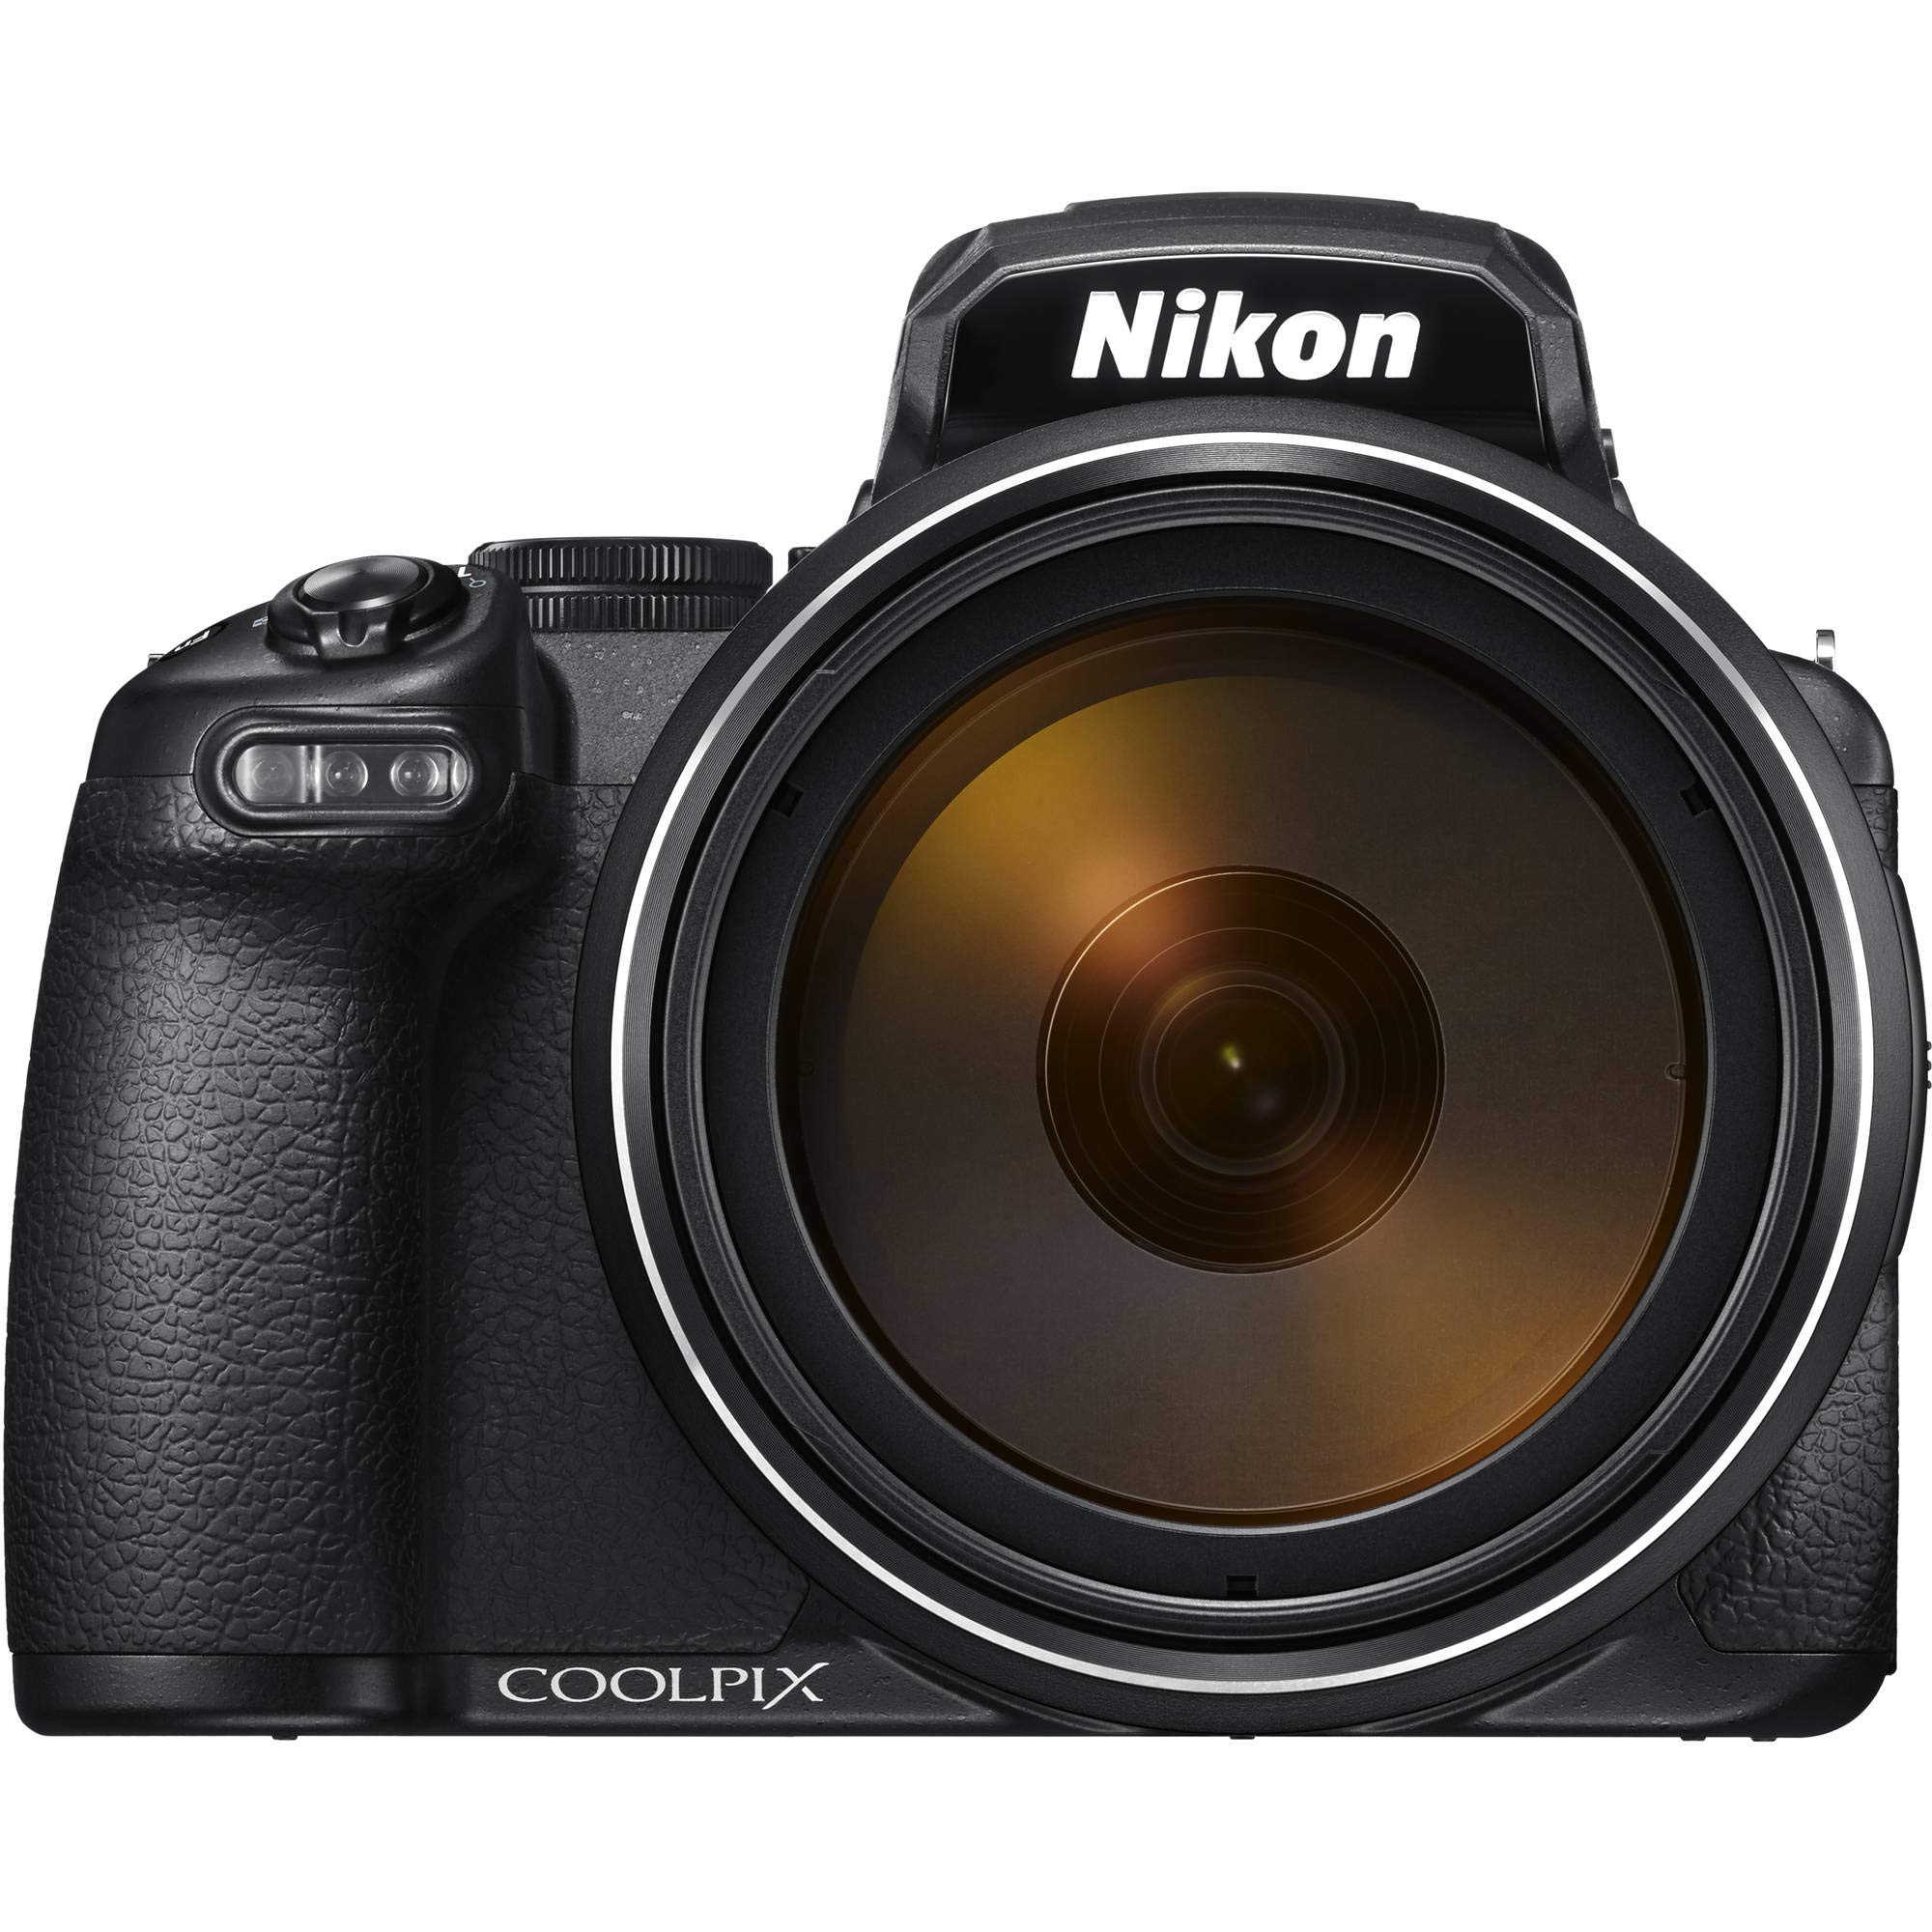 Nikon COOLPIX P1000 Digital Camera + 128GB Sandisk Extreme Memory Card Professional Bundle International Model